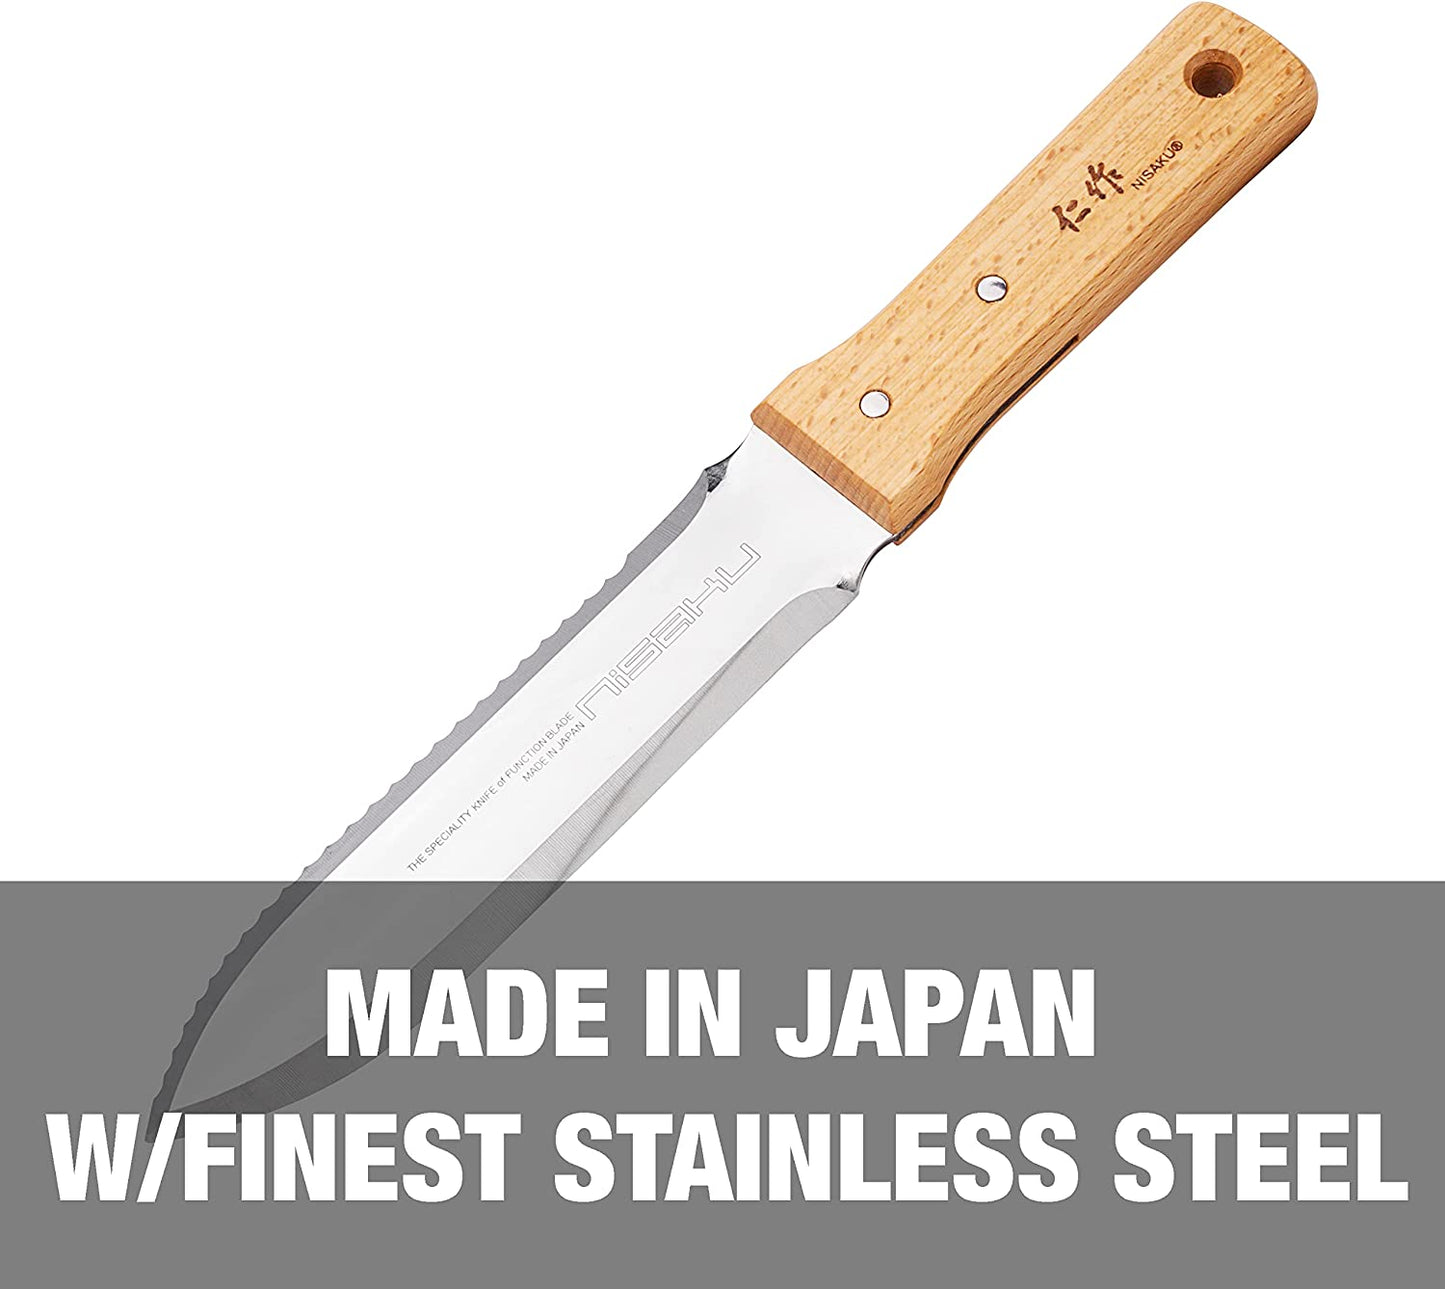 NISAKU NJP650 The Original HORI HORI Japanese Stainless Steel Weeding Knife